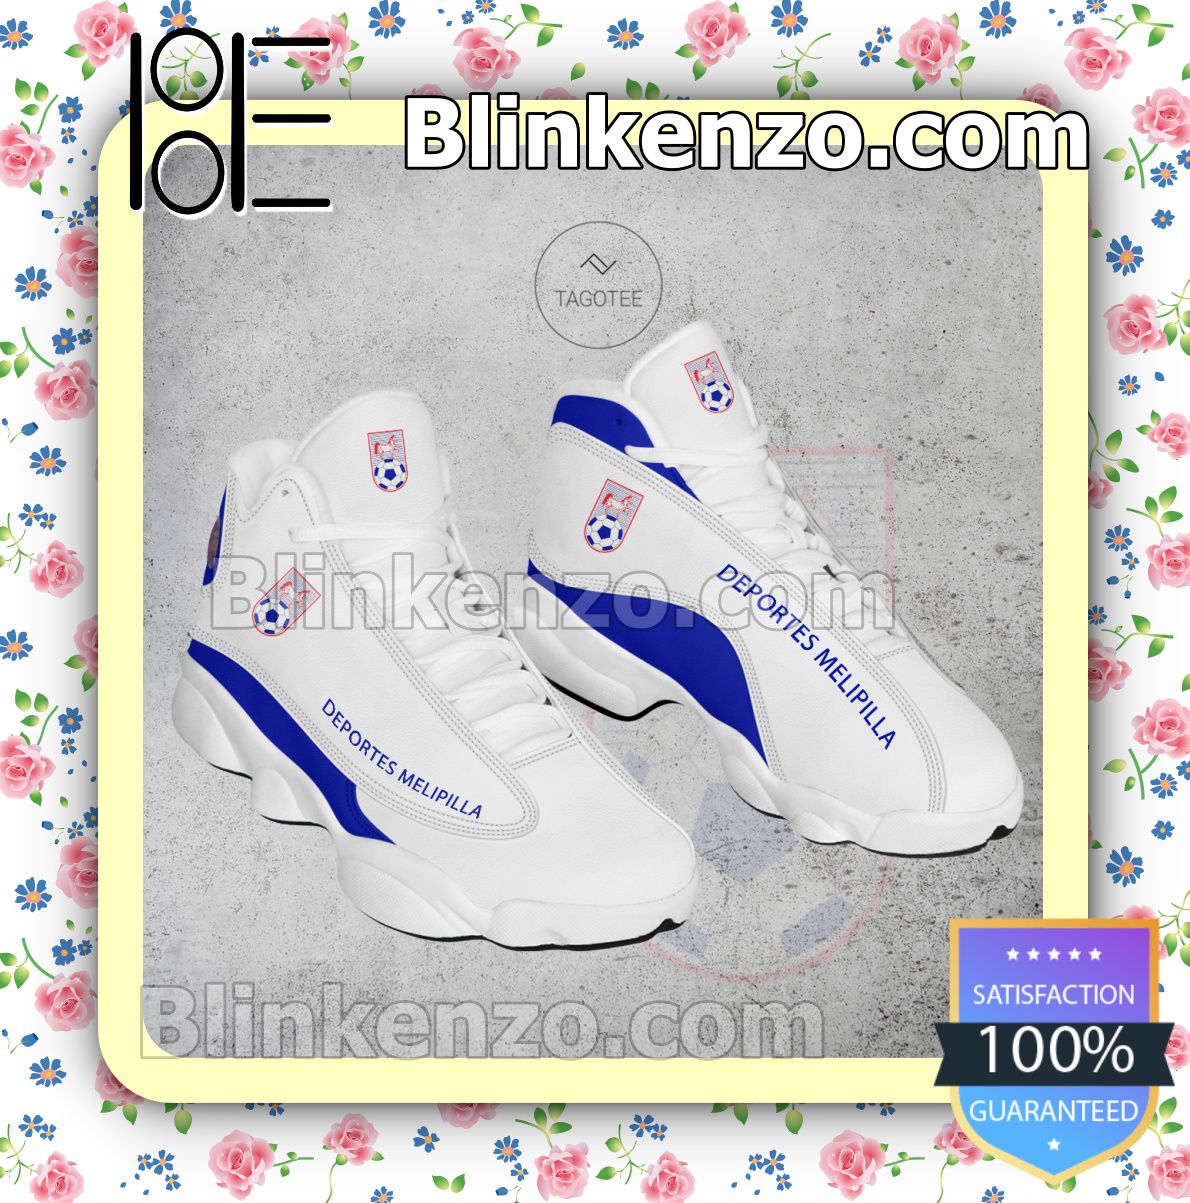 Deportes Melipilla Club Jordan Retro Sneakers - Blinkenzo